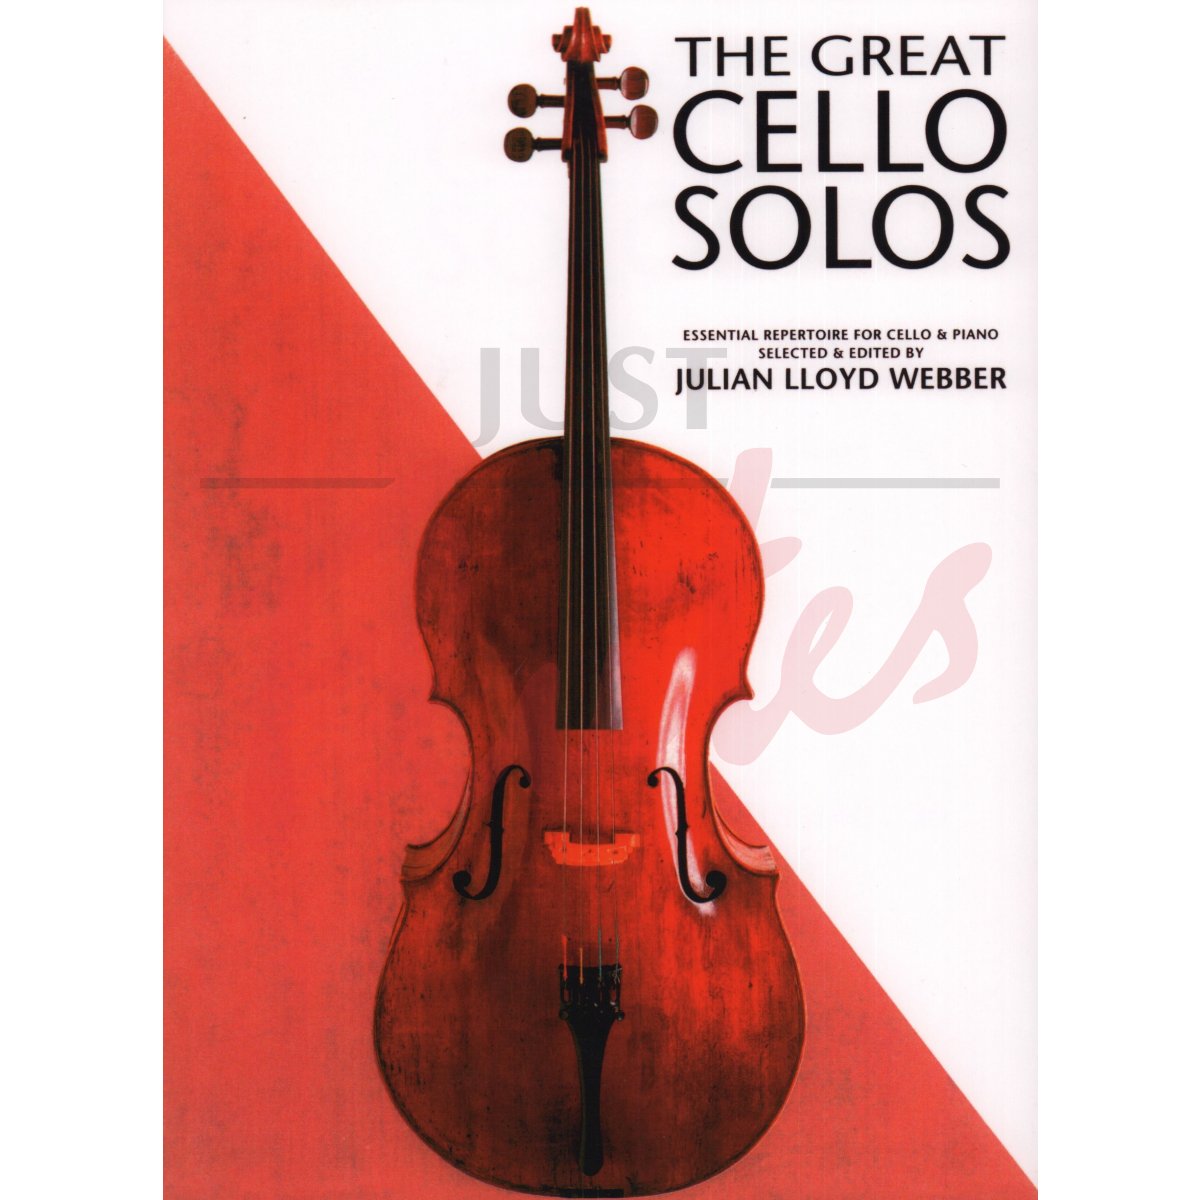 The Great Cello Solos for Cello and Piano